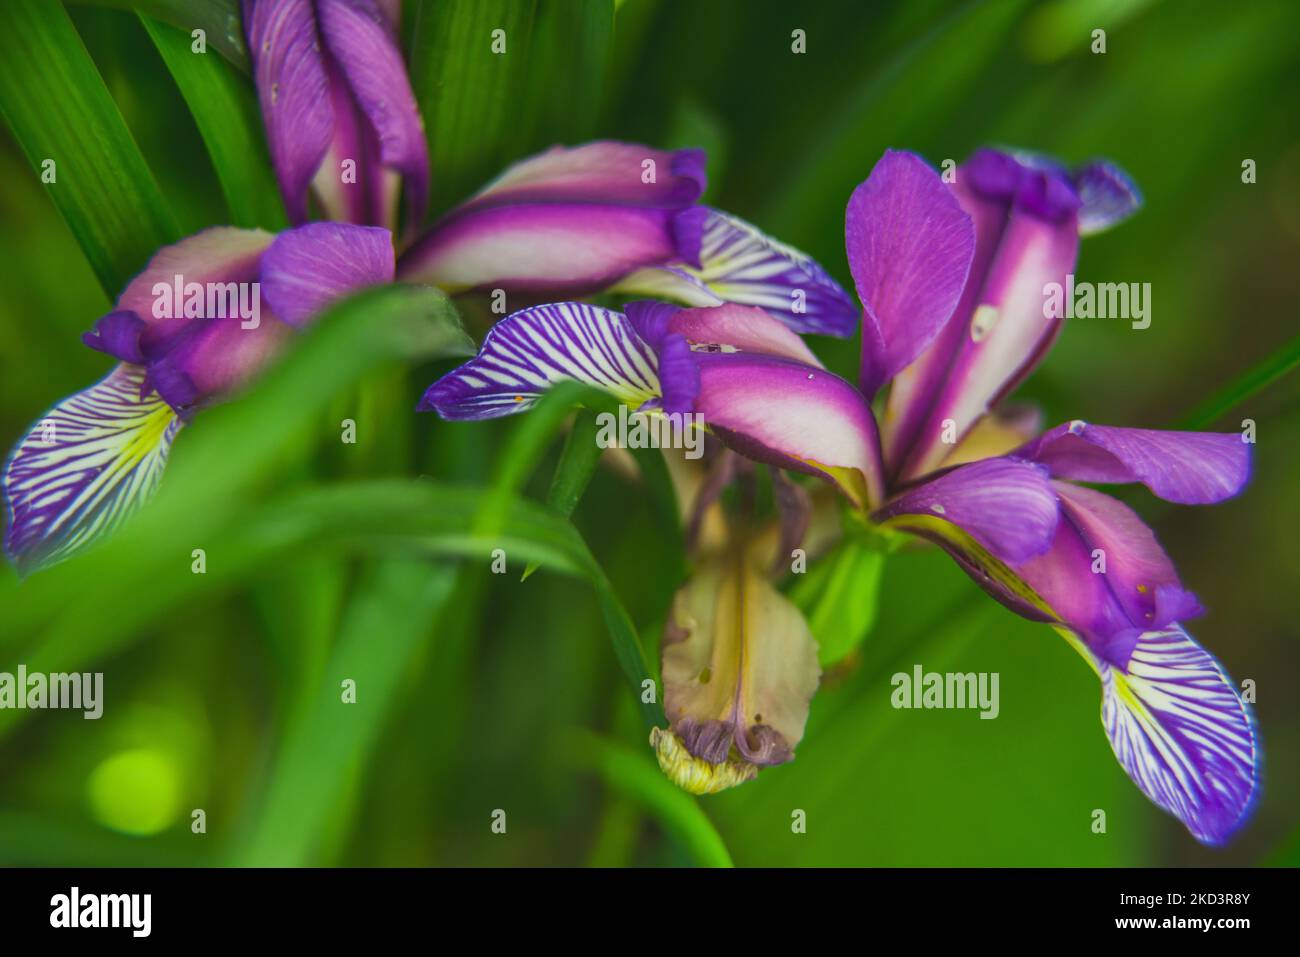 Iris graminea on blurred background.  Stock Photo